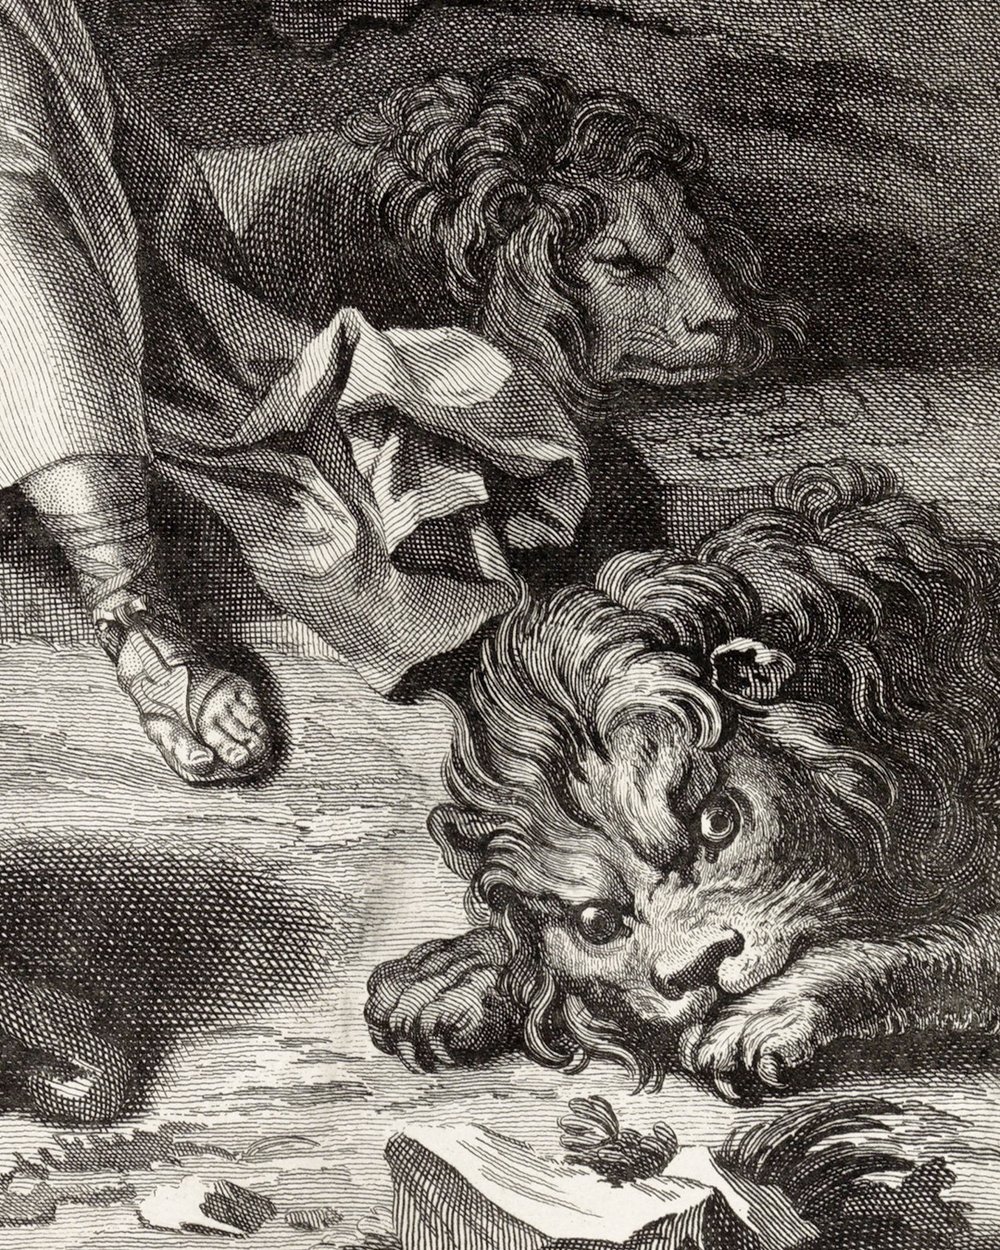 "Daniel in the lions' den" (1720 - 1728)